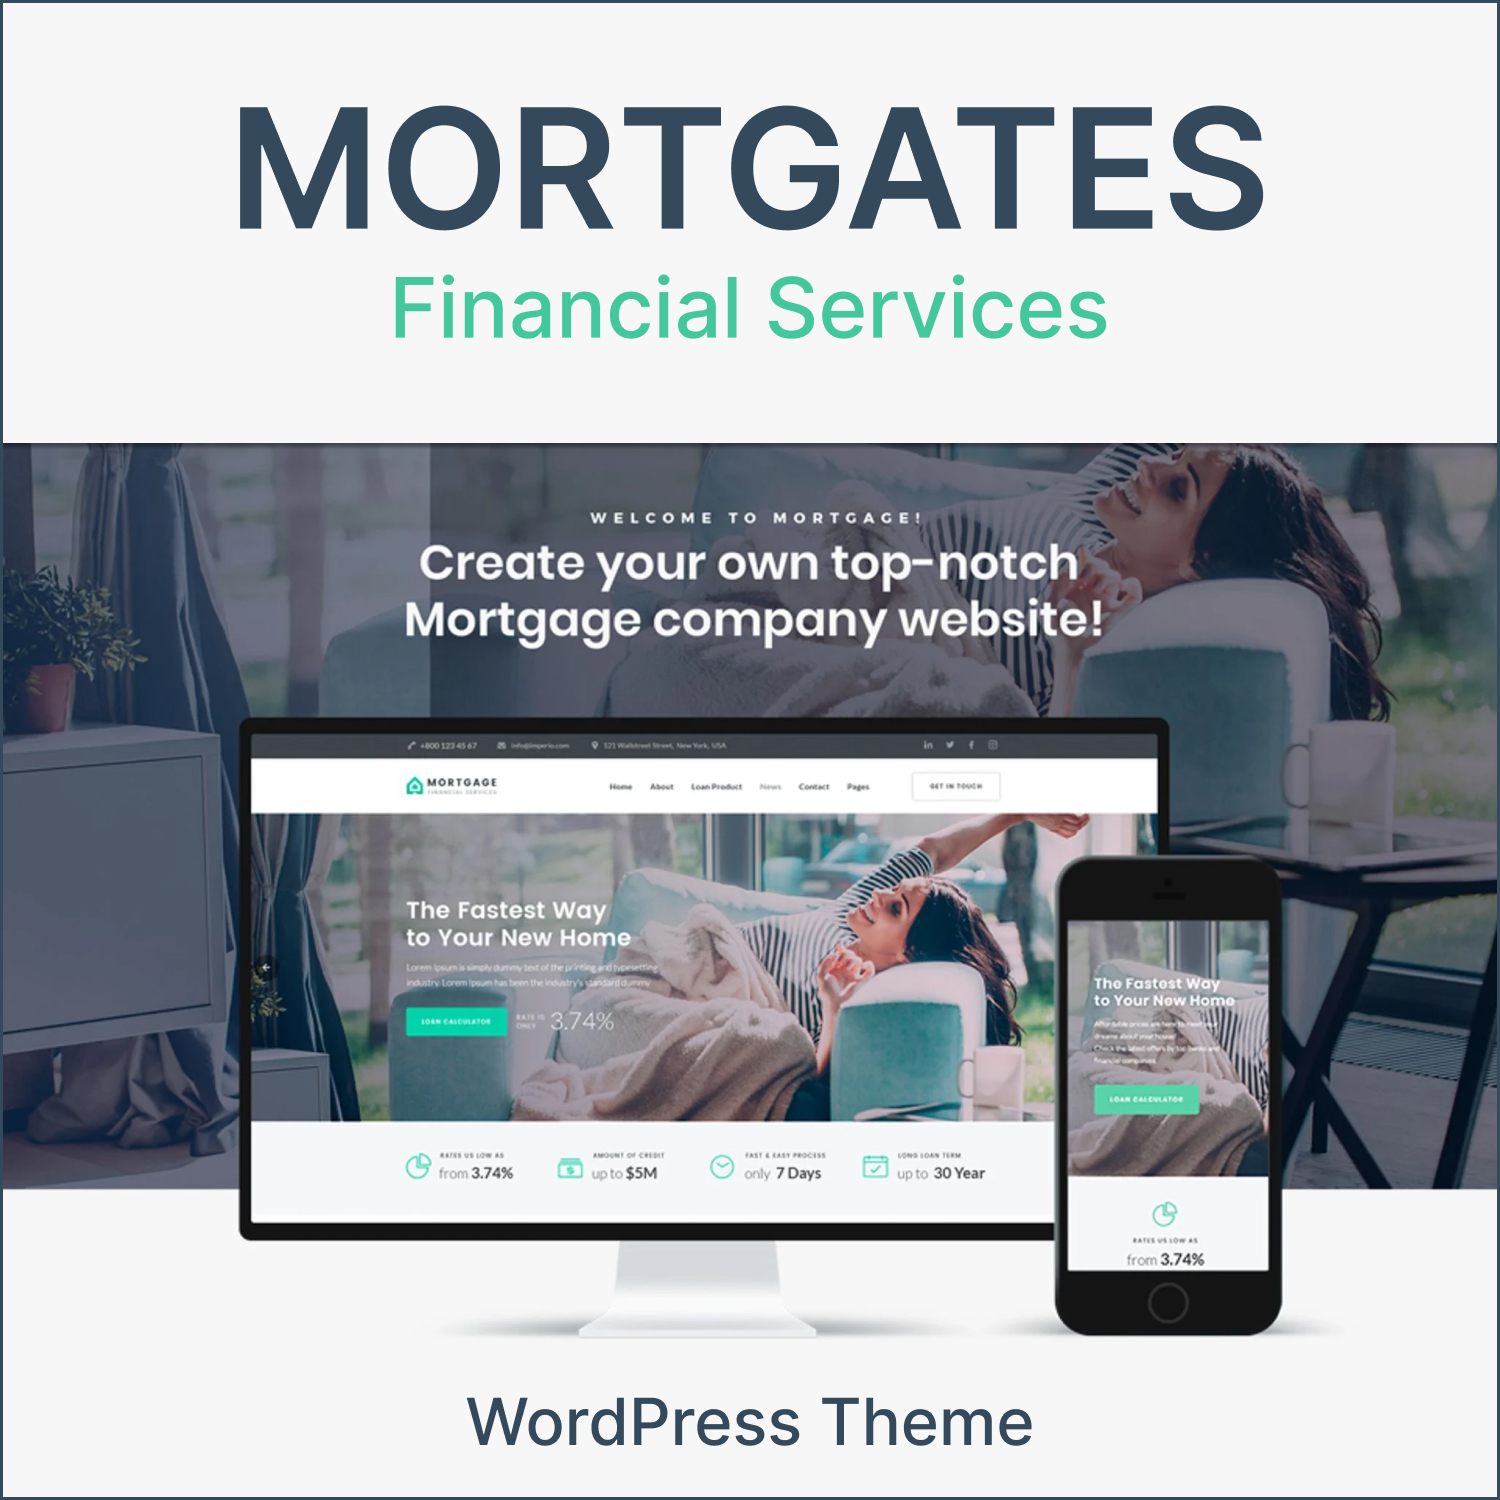 Preview images mortgates financial services wordpress theme.